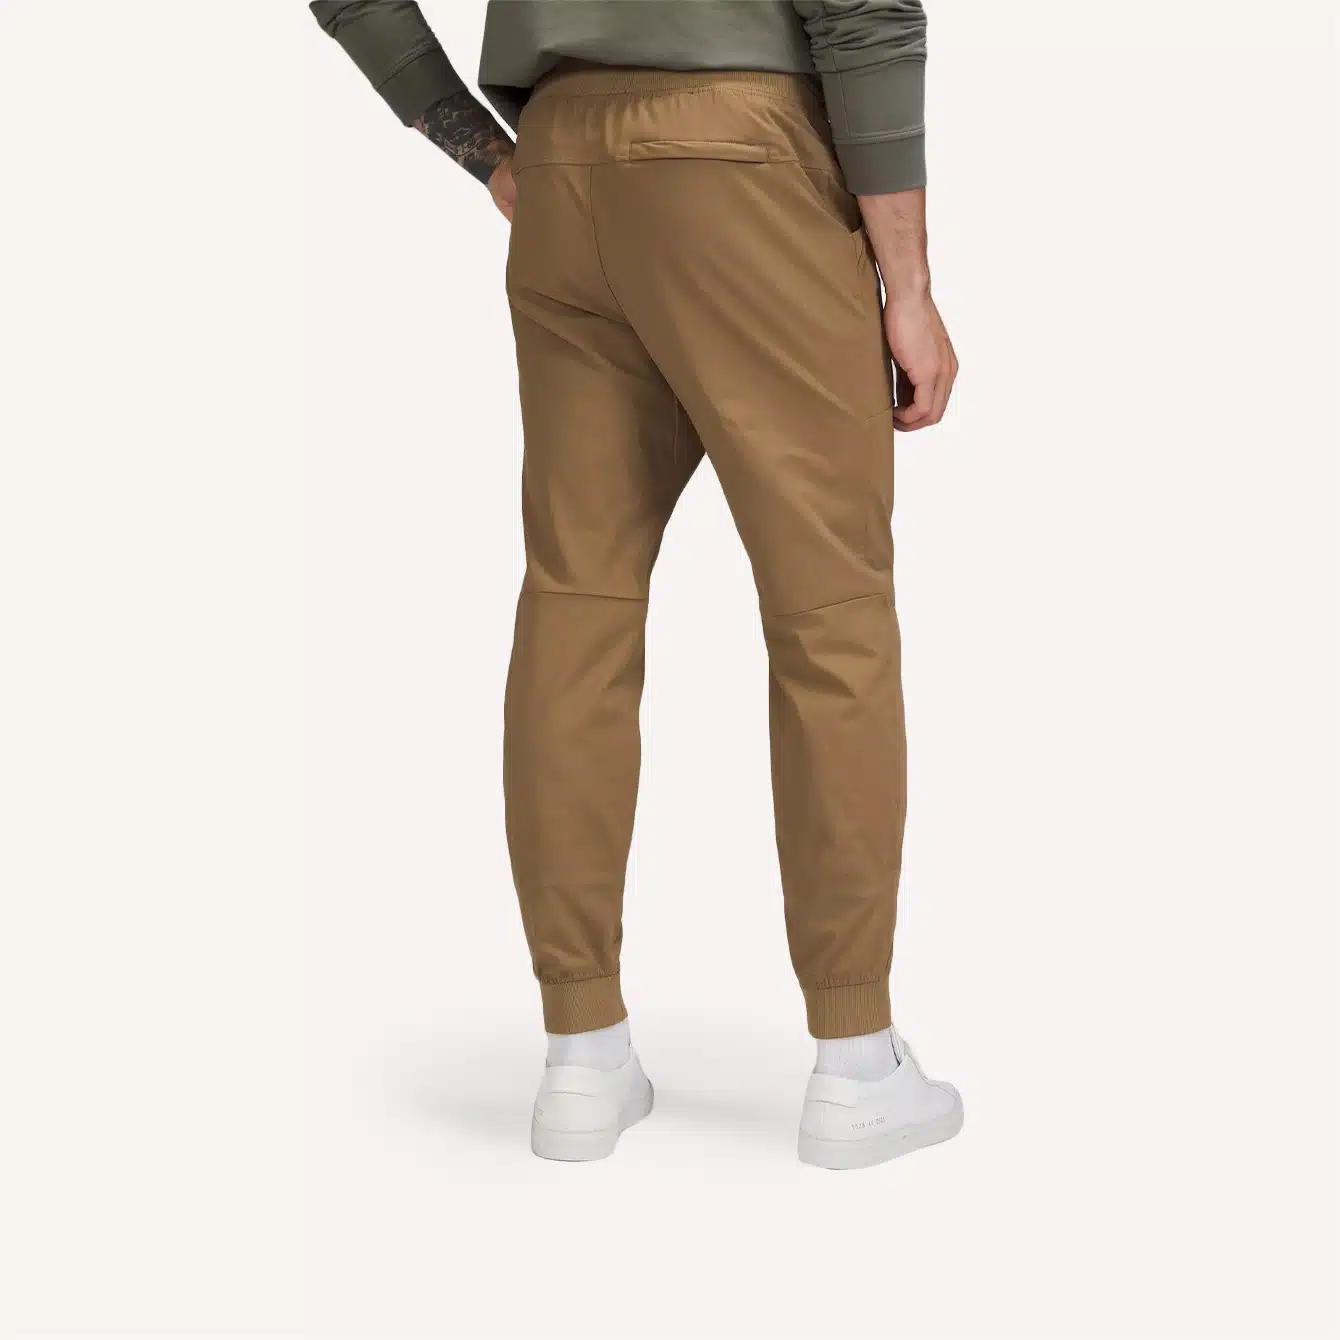 Buy Slang India Men's Slim Pants (S2236_Cream_36) at Amazon.in